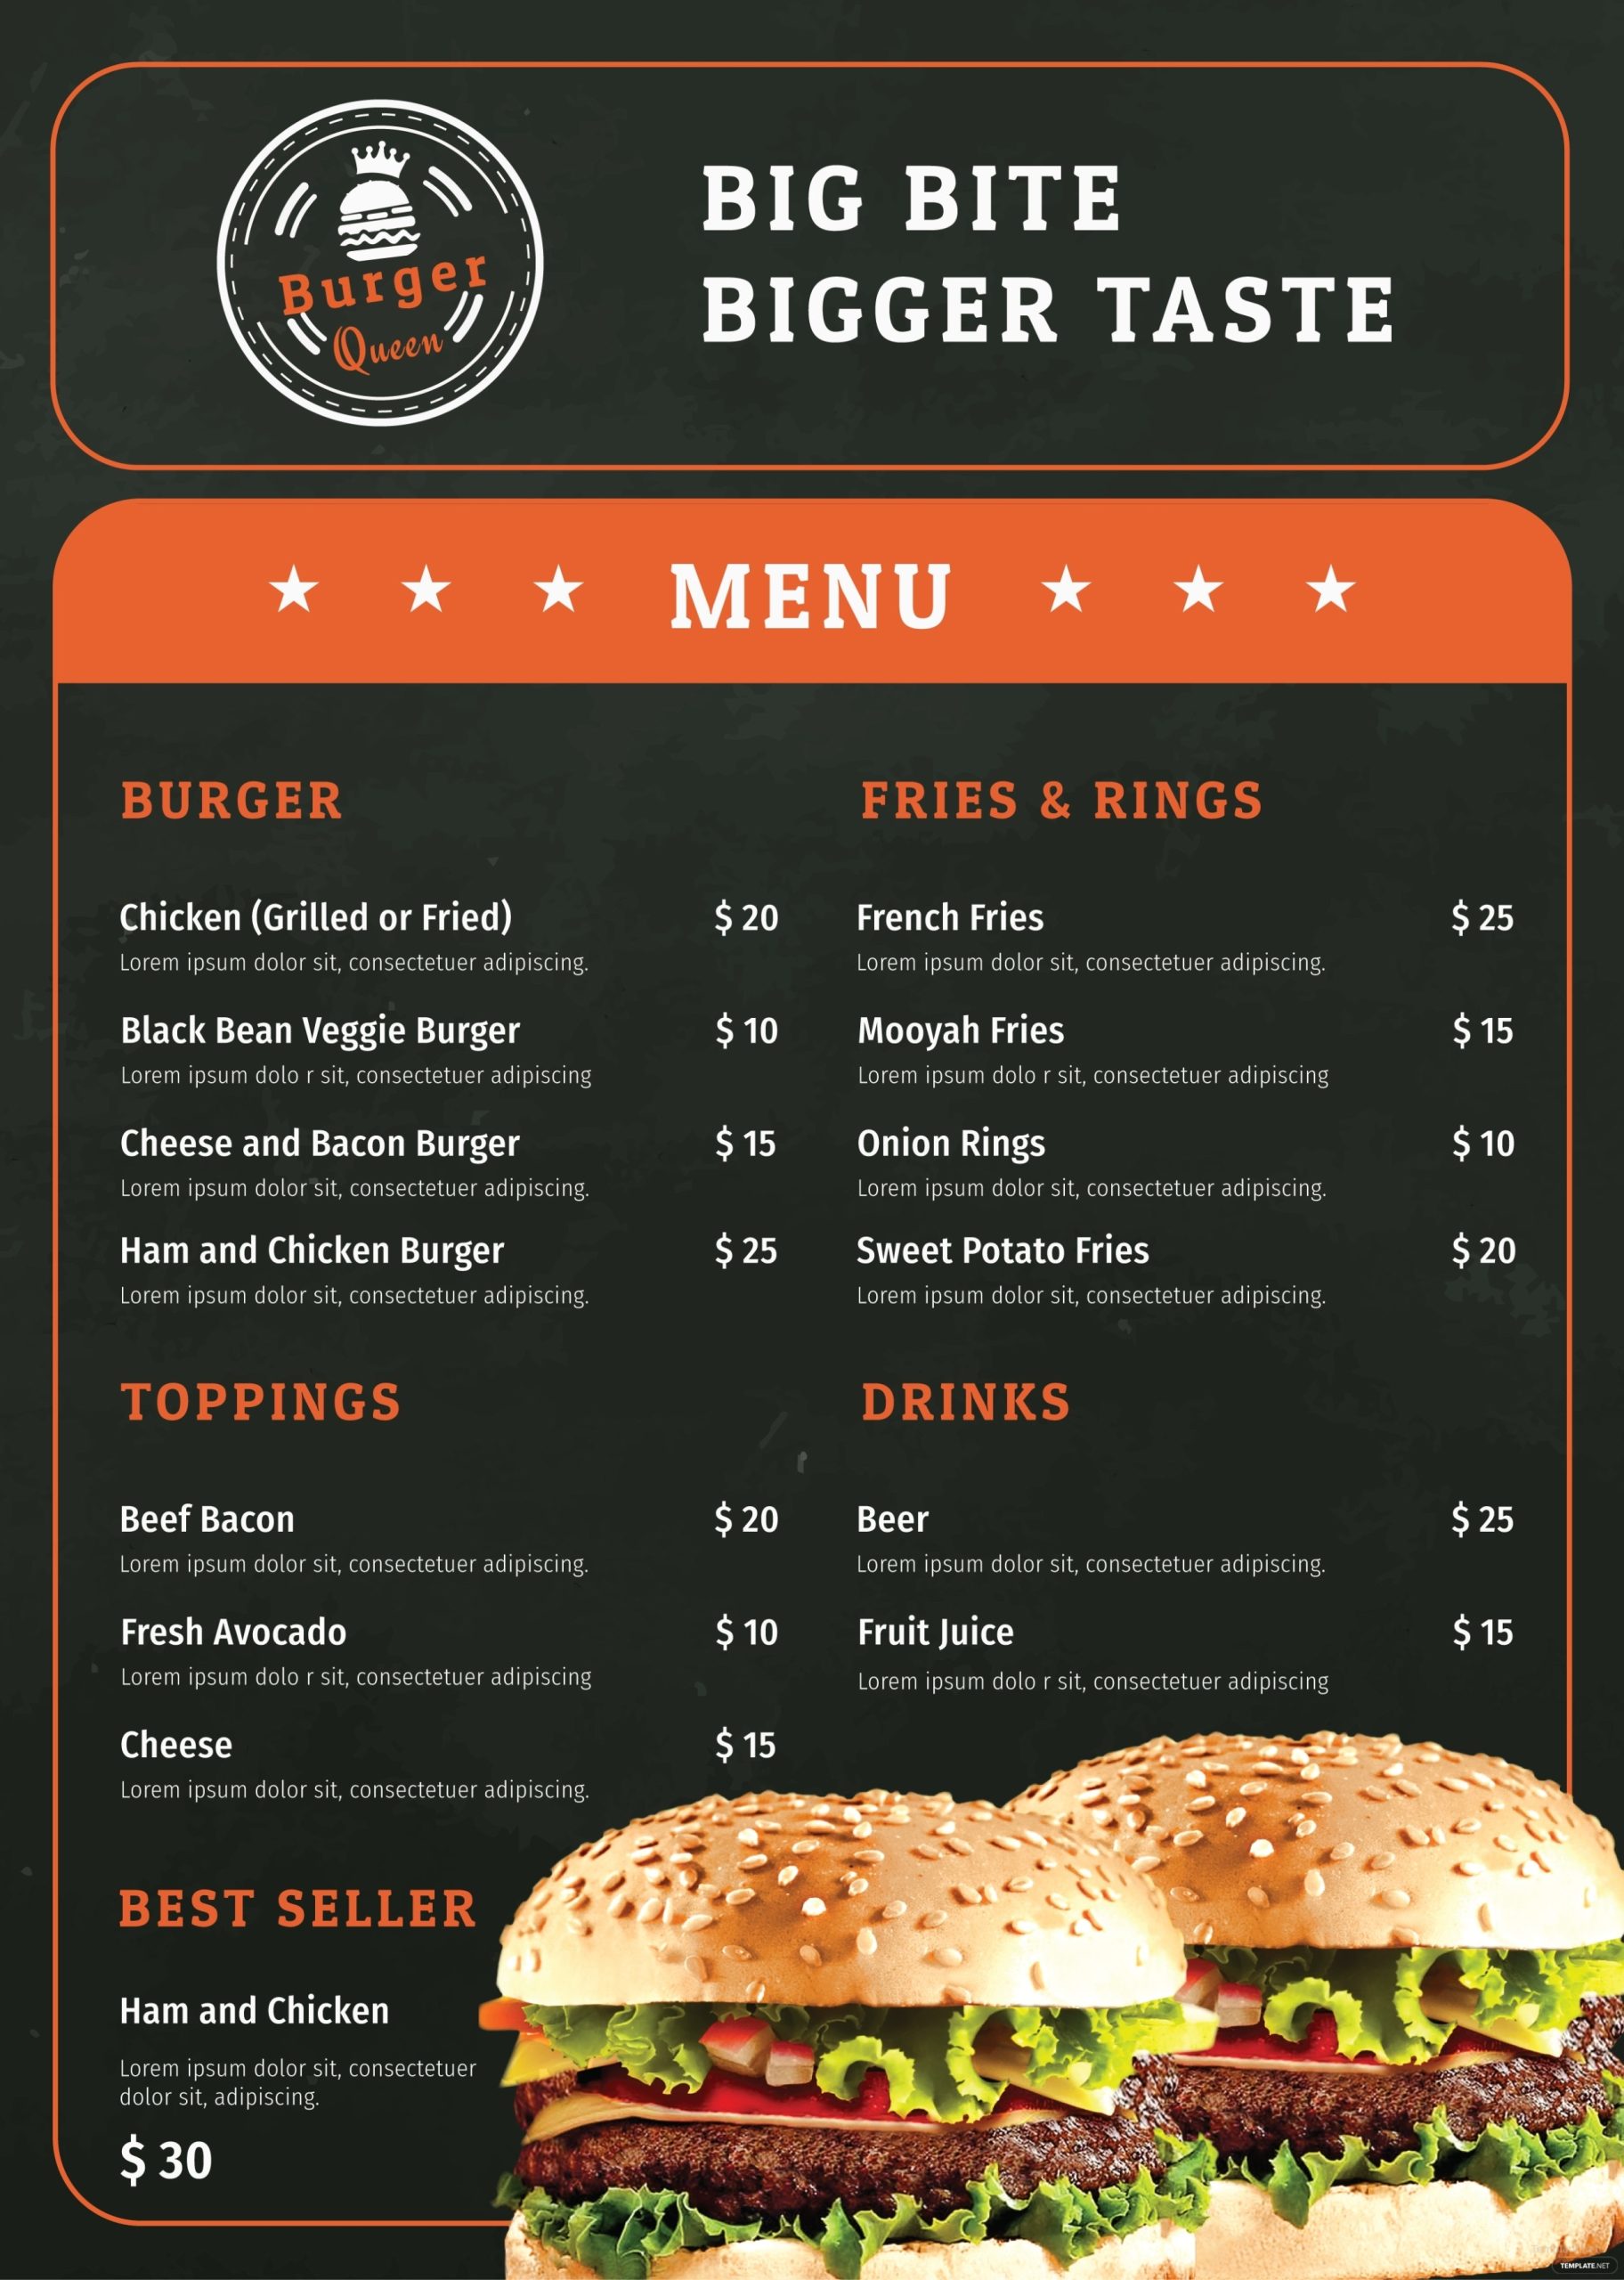 Free Burger Menu Template In Adobe Photoshop, Microsoft Word, Microsoft In Product Menu Template